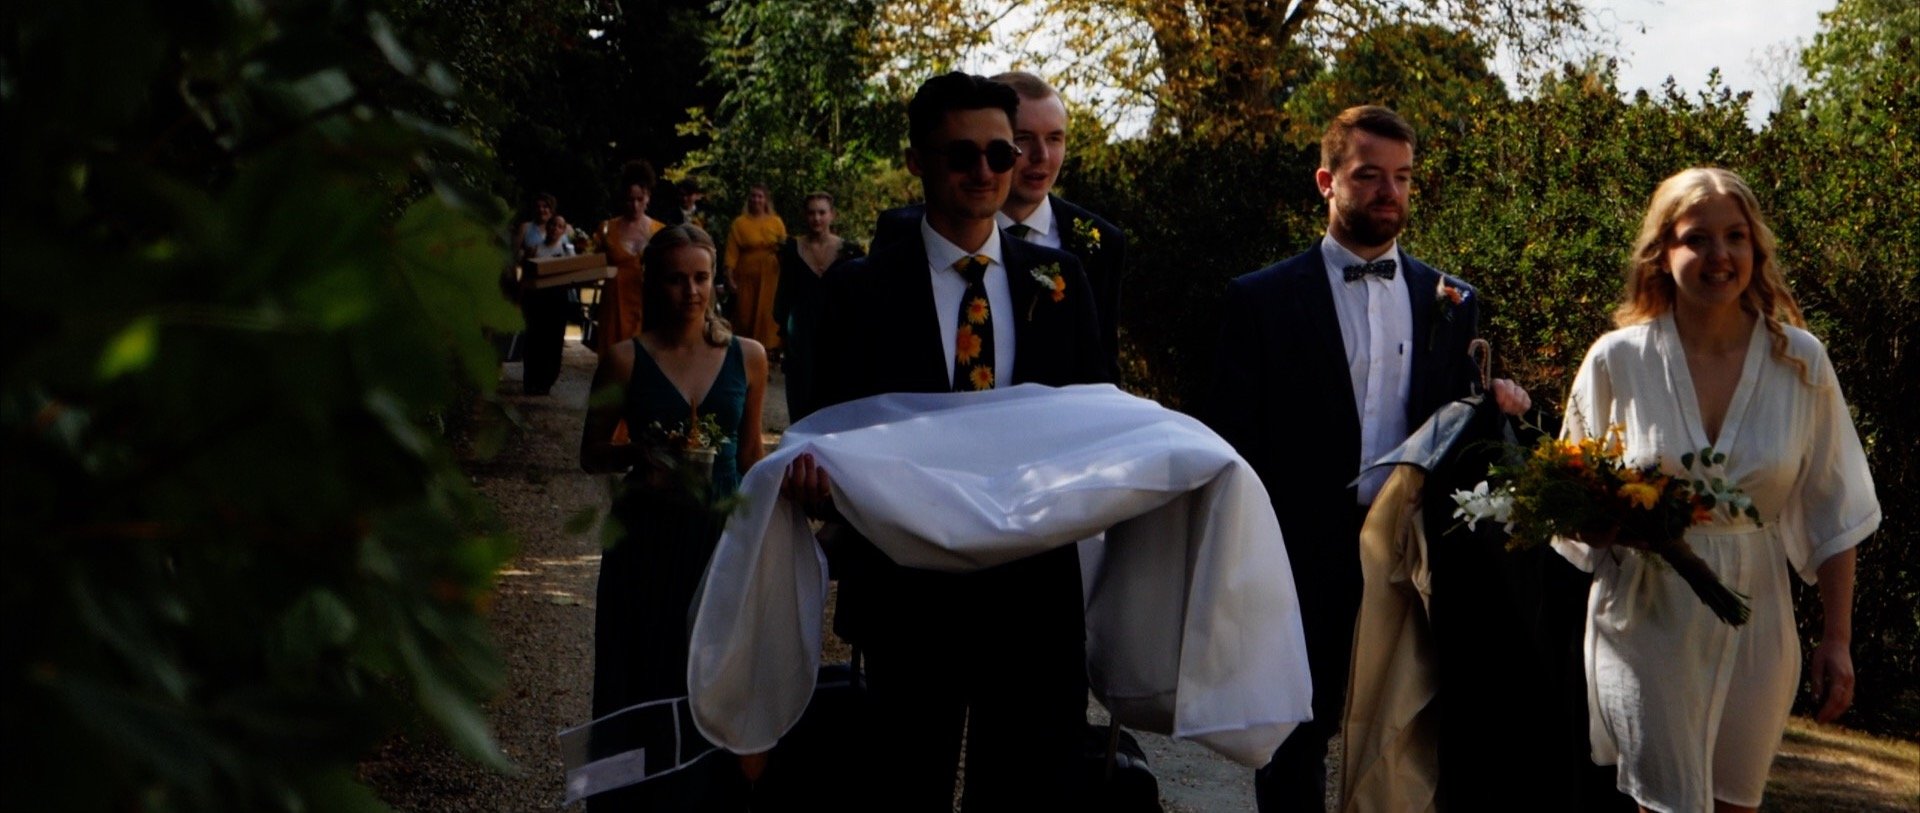 Bridal party arrival - Apton Hall essex.jpg